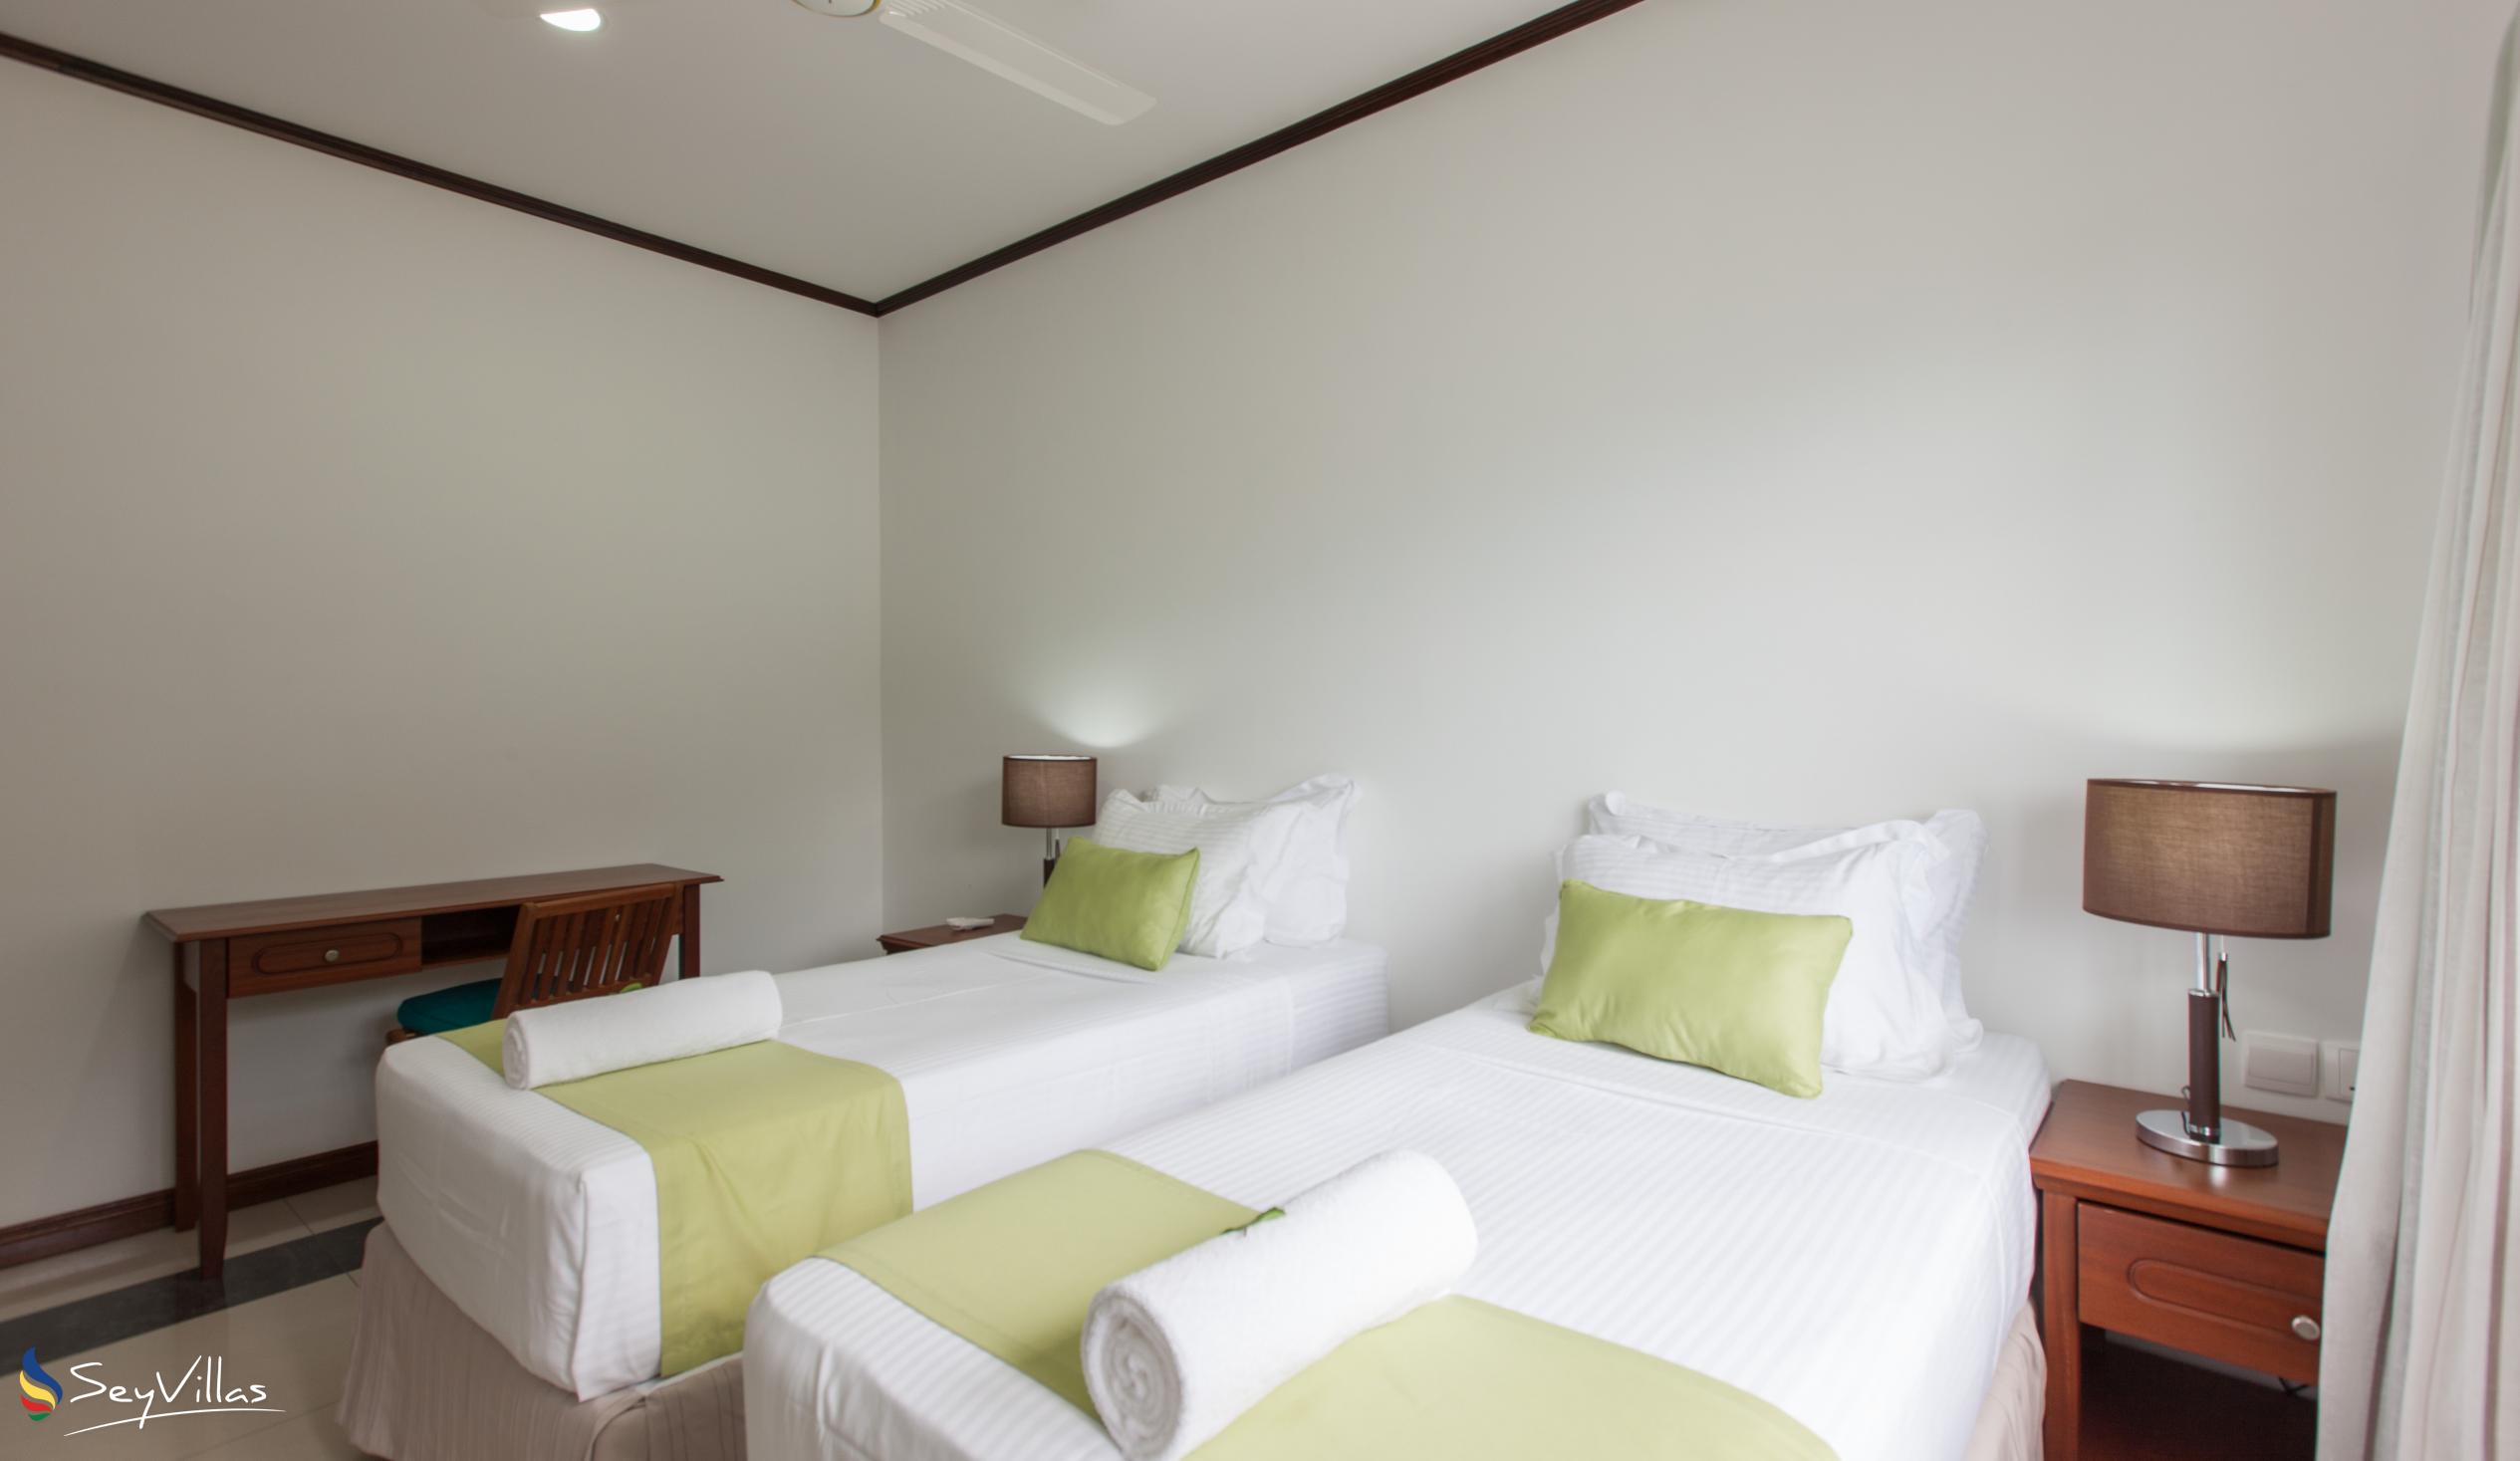 Photo 56: Bambous River Lodge - 2-Bedroom Apartment - Mahé (Seychelles)